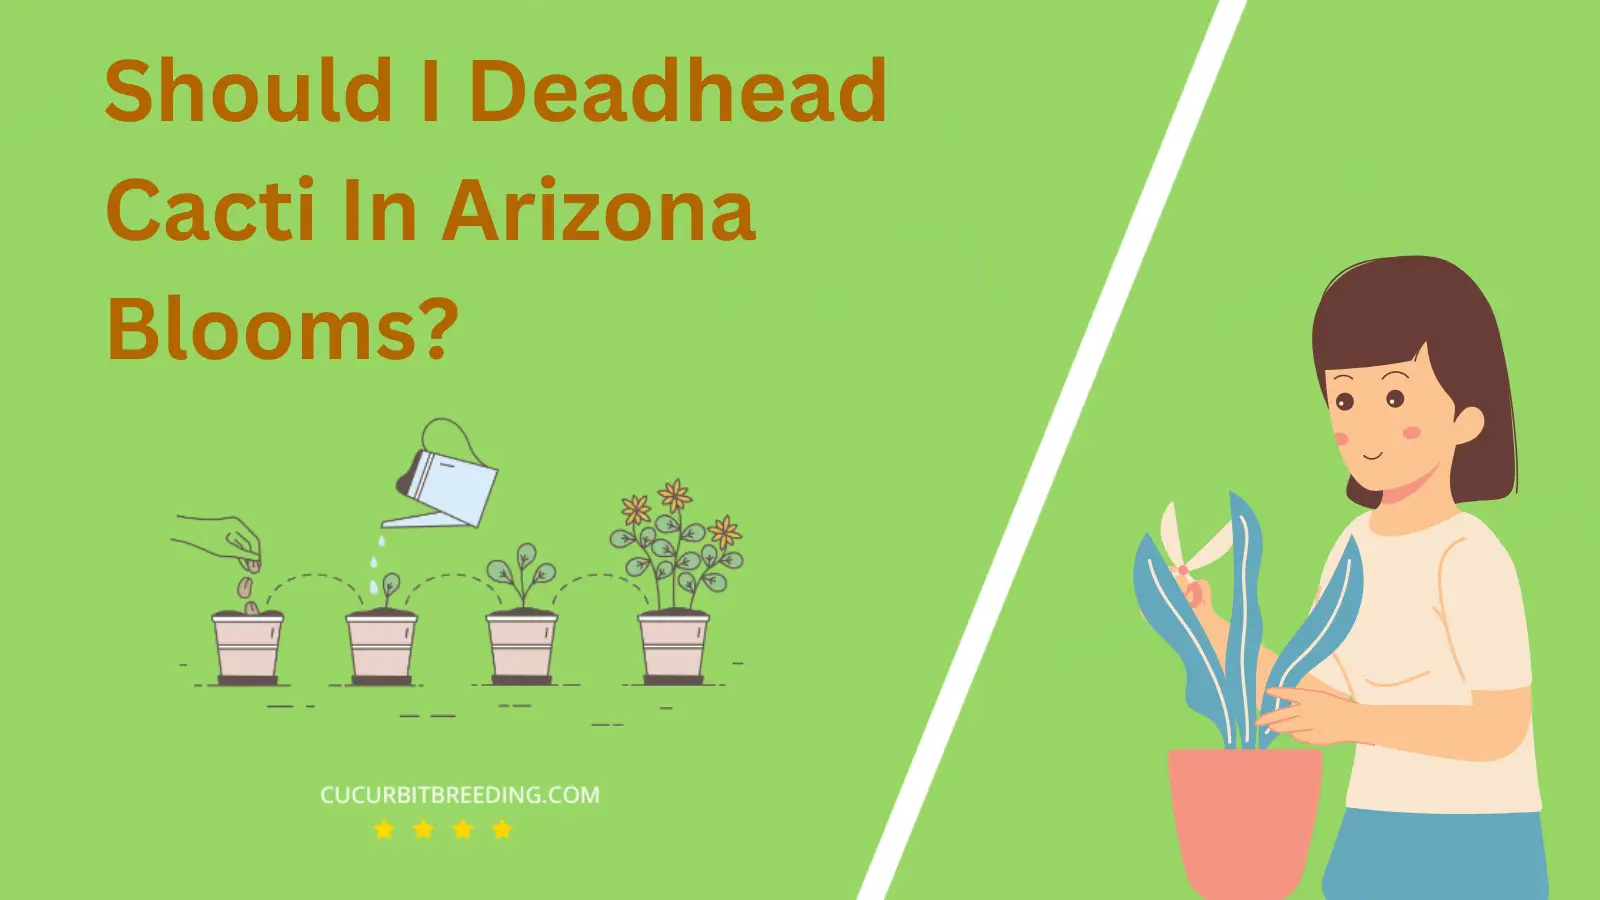 Should I Deadhead Cacti In Arizona Blooms?